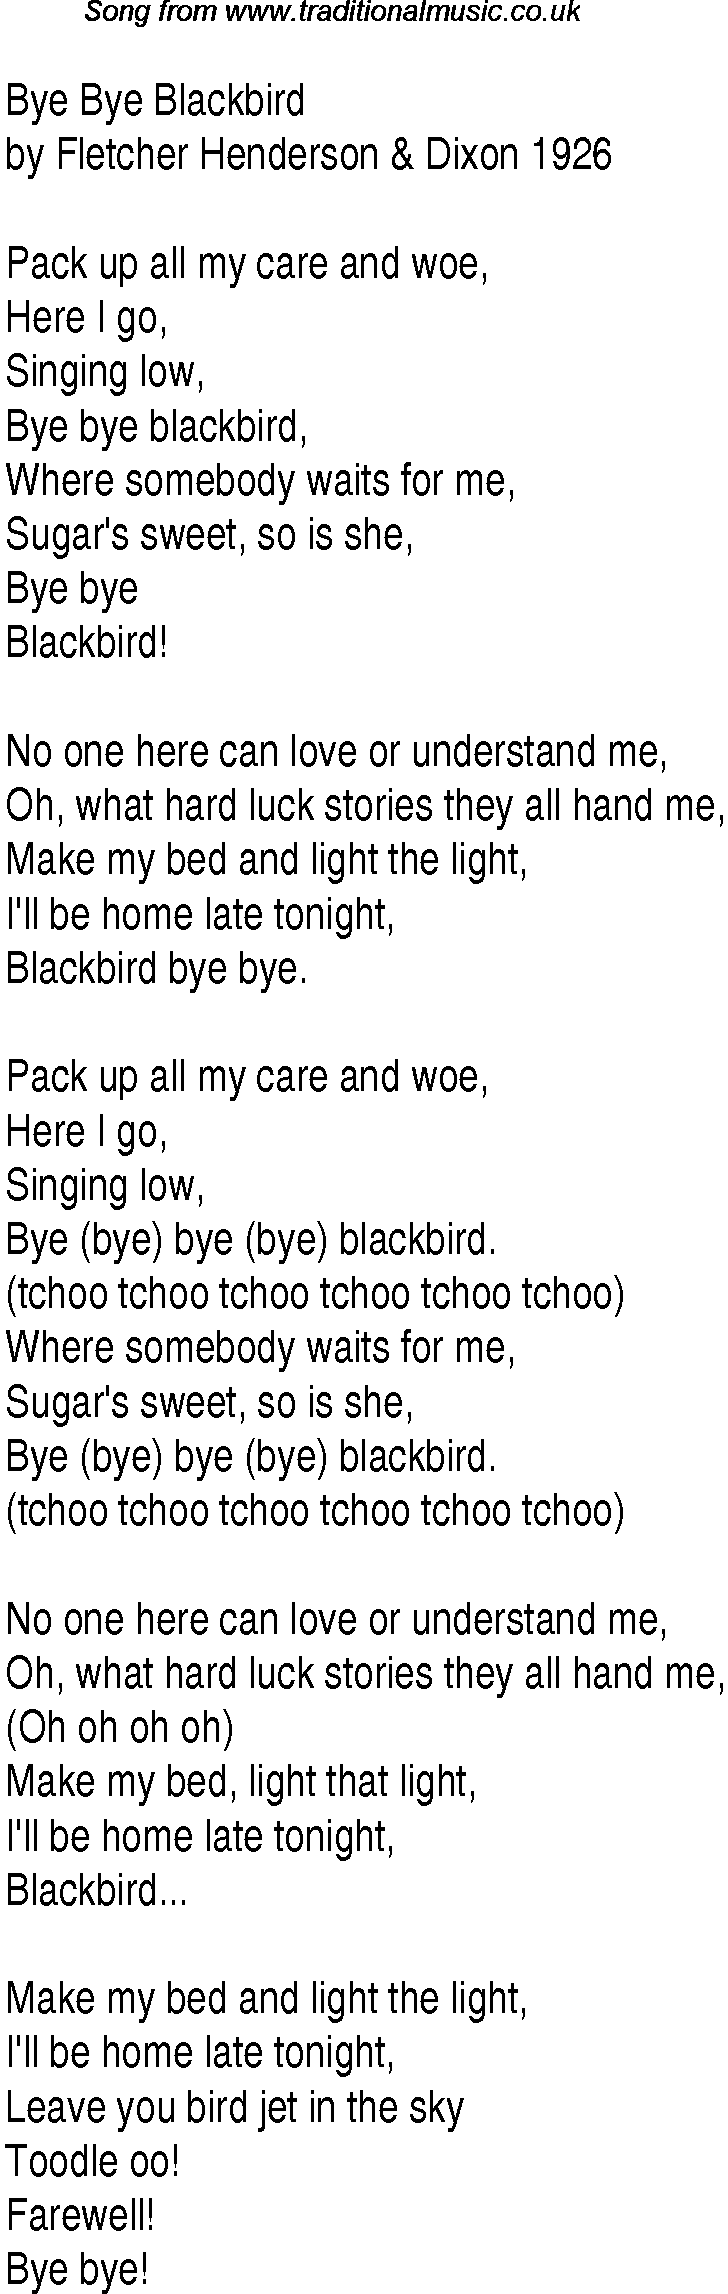 1940s top songs - lyrics for Bye Bye Blackbird